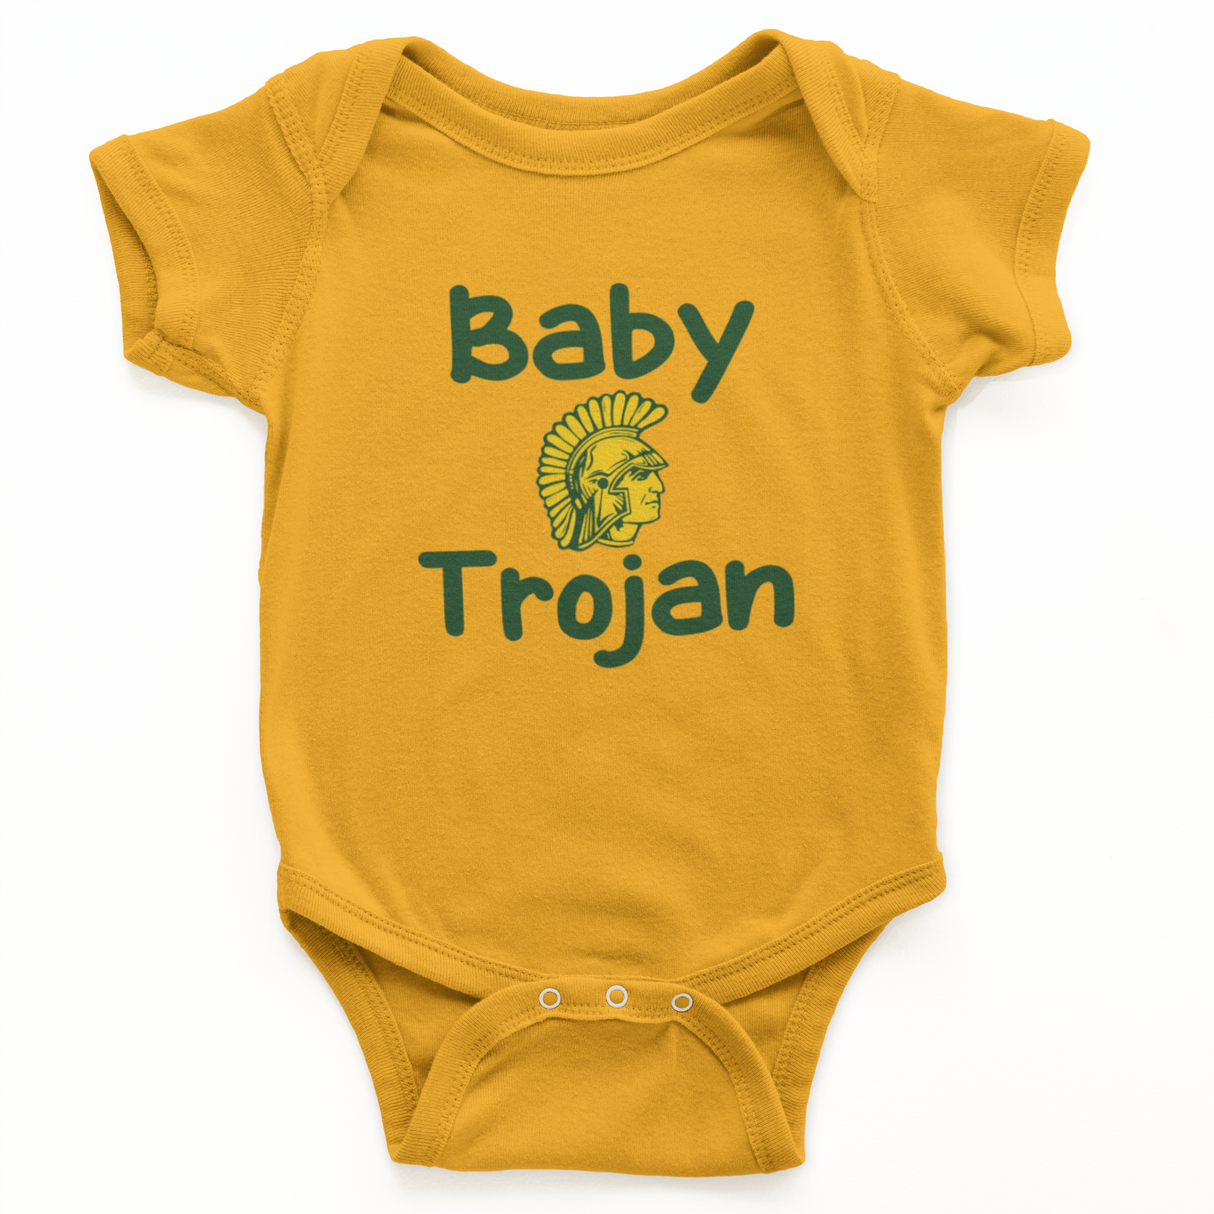 Baby Trojan Onesie